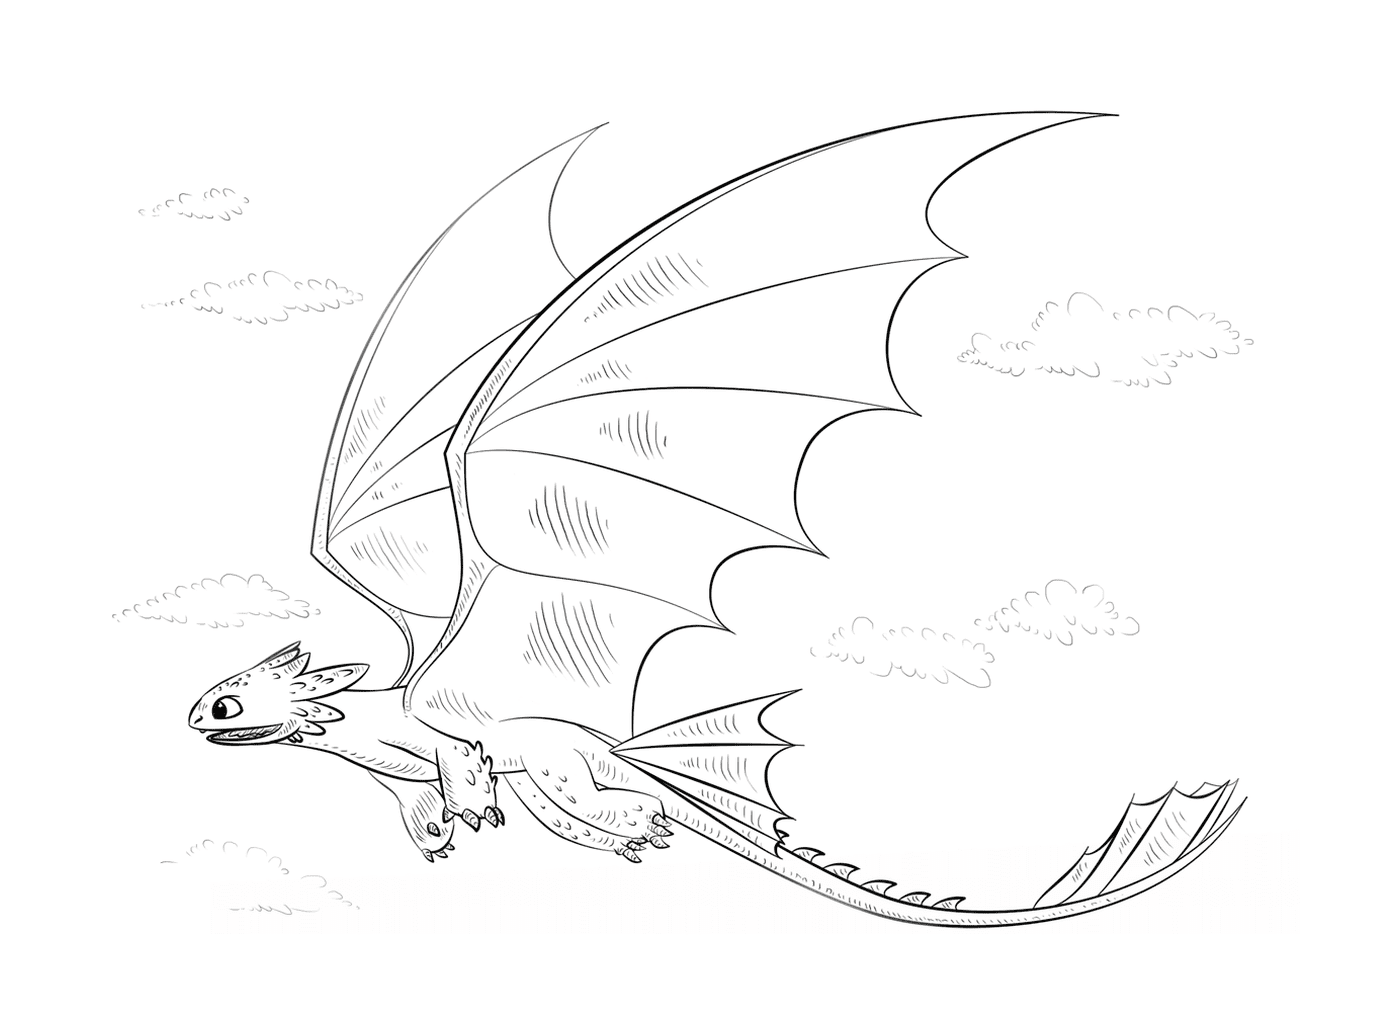  Dragon raro, volo maestoso 